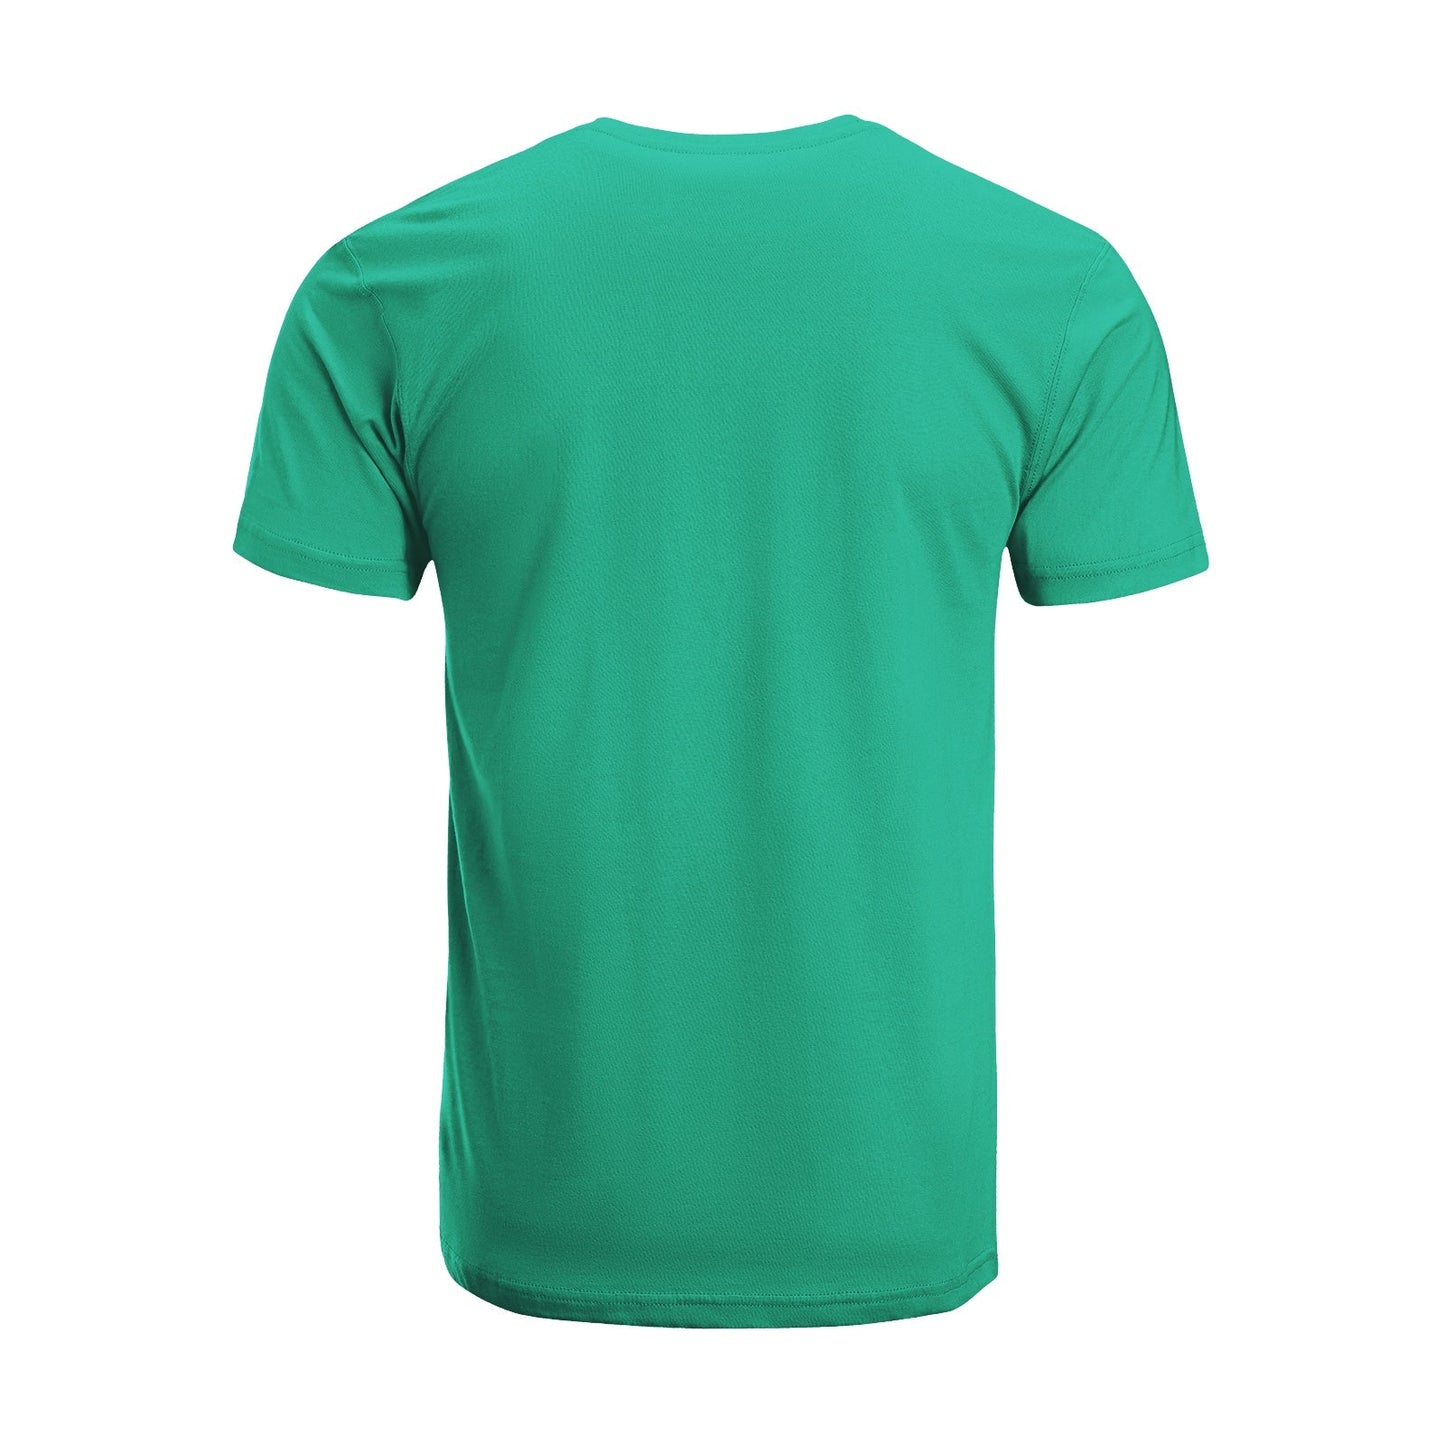 Unisex Short Sleeve Crew Neck Cotton Jersey T-Shirt CAT 15 - Tara-Outfits.com